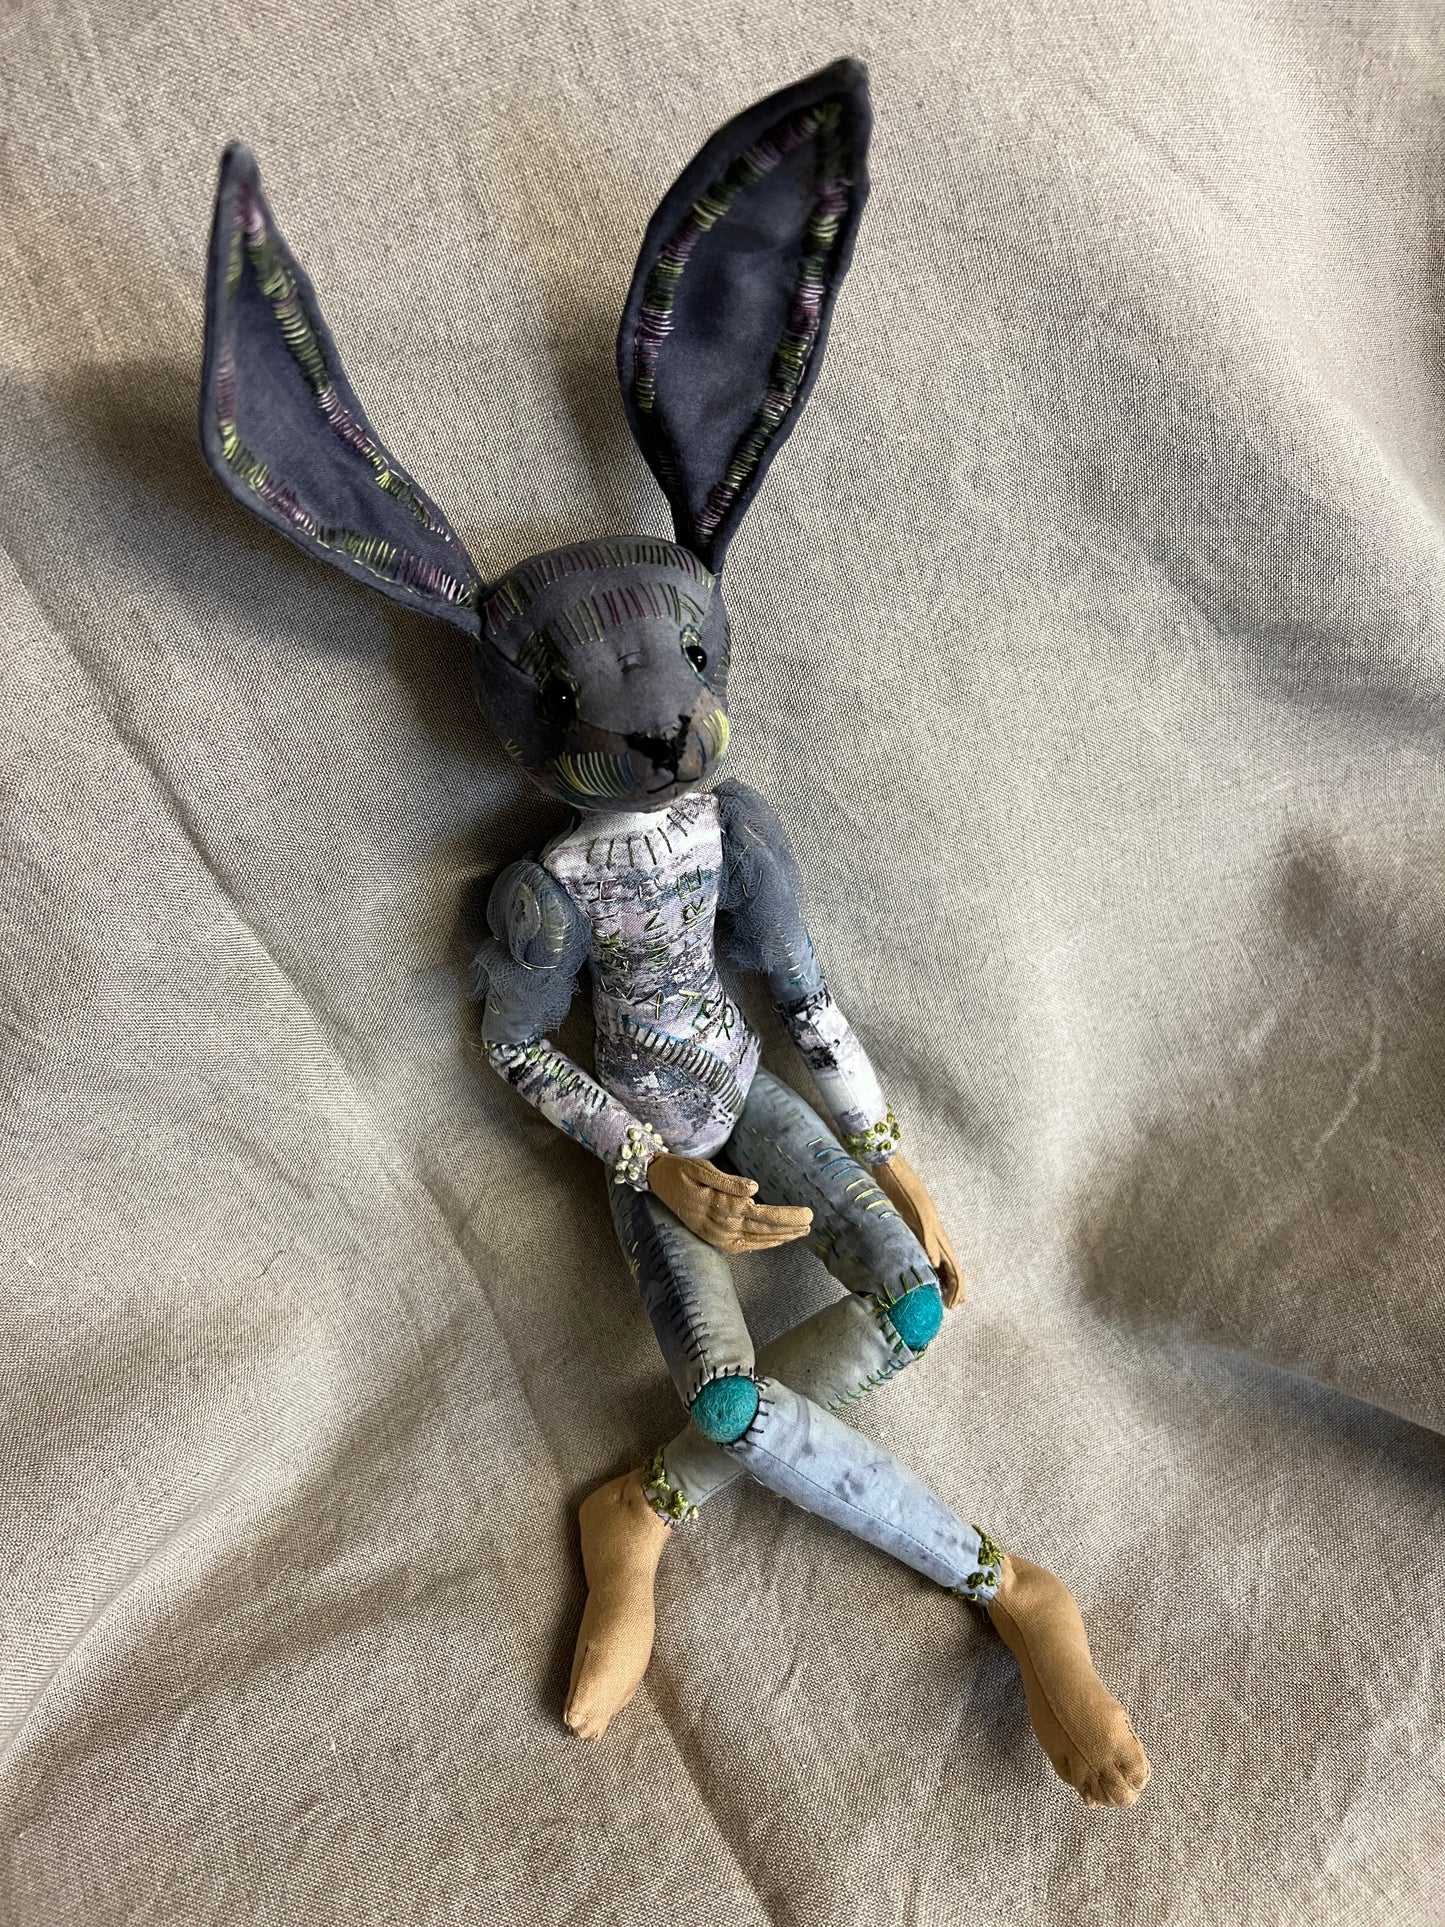 Elemental Rabbit made by Jan Horrox